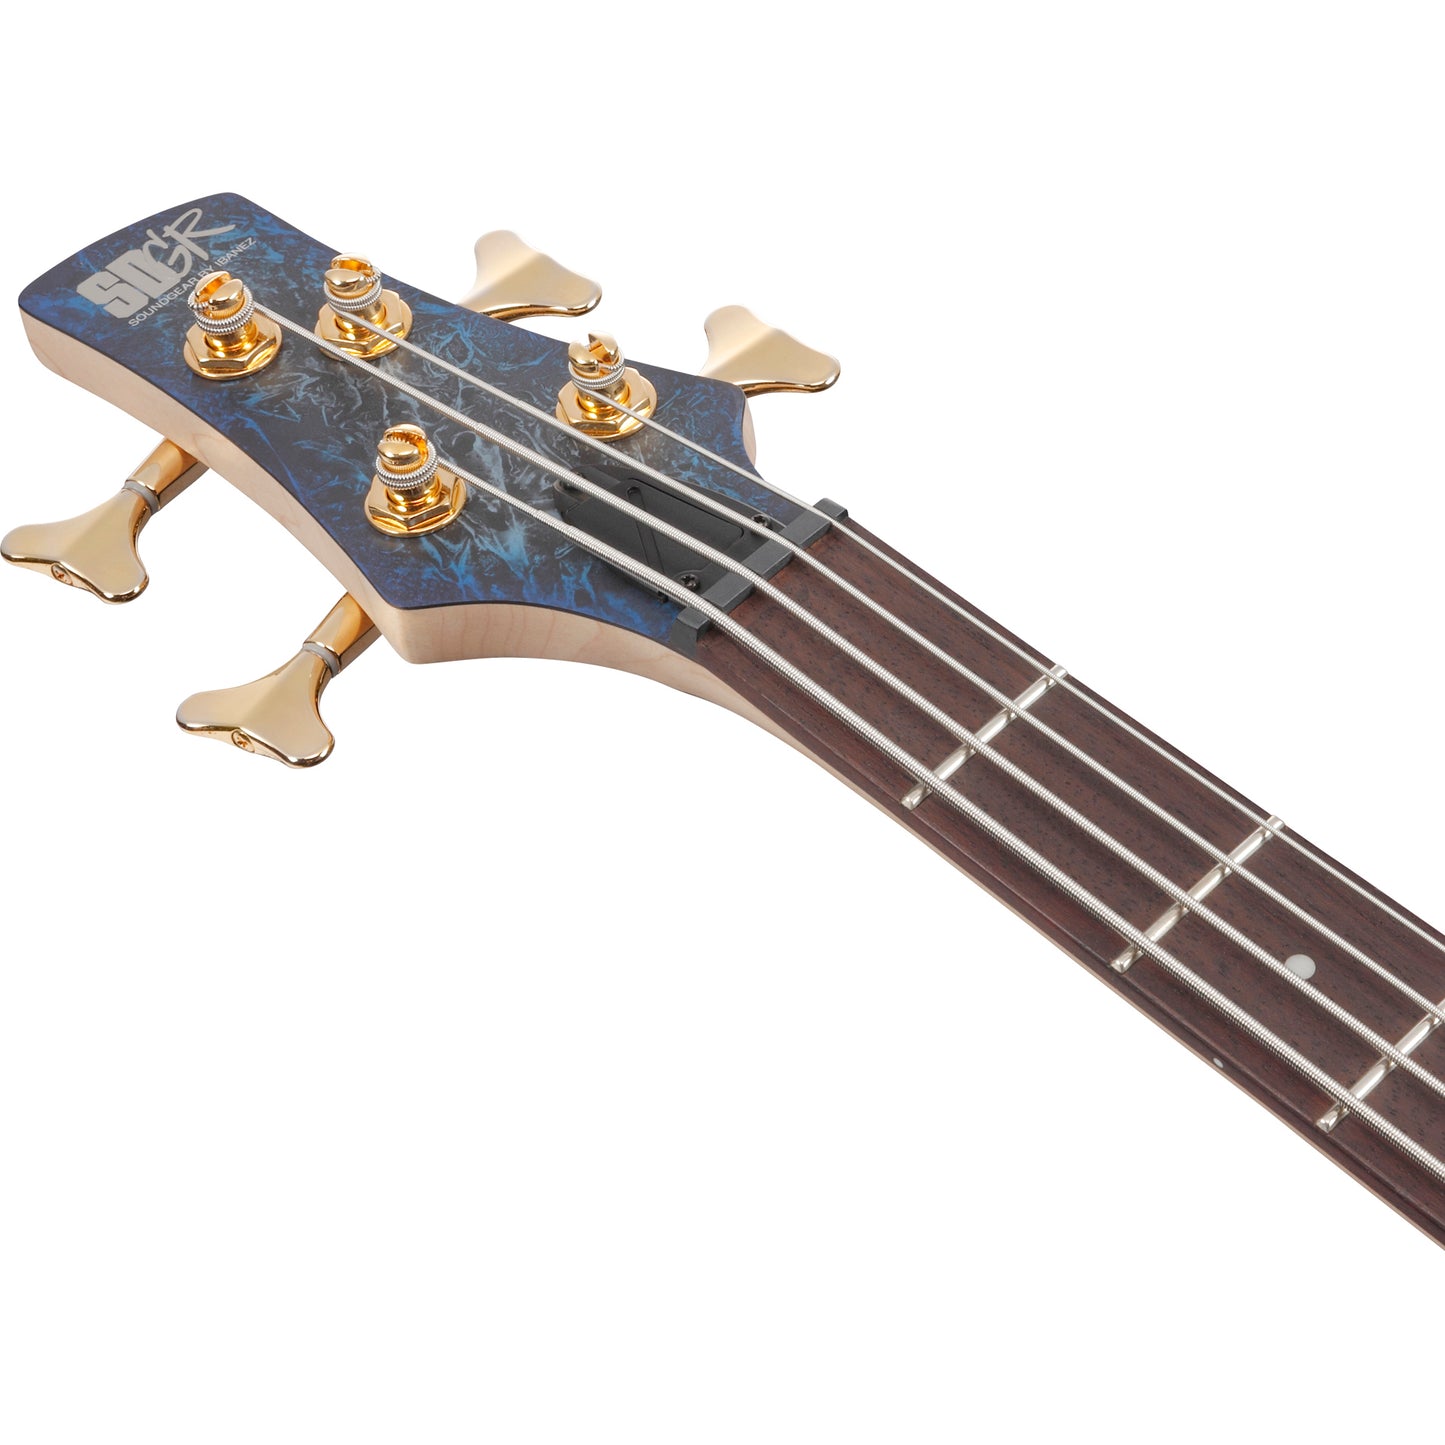 Ibanez SR Standard 4 String Electric Bass - Cosmic Blue Frozen Matte